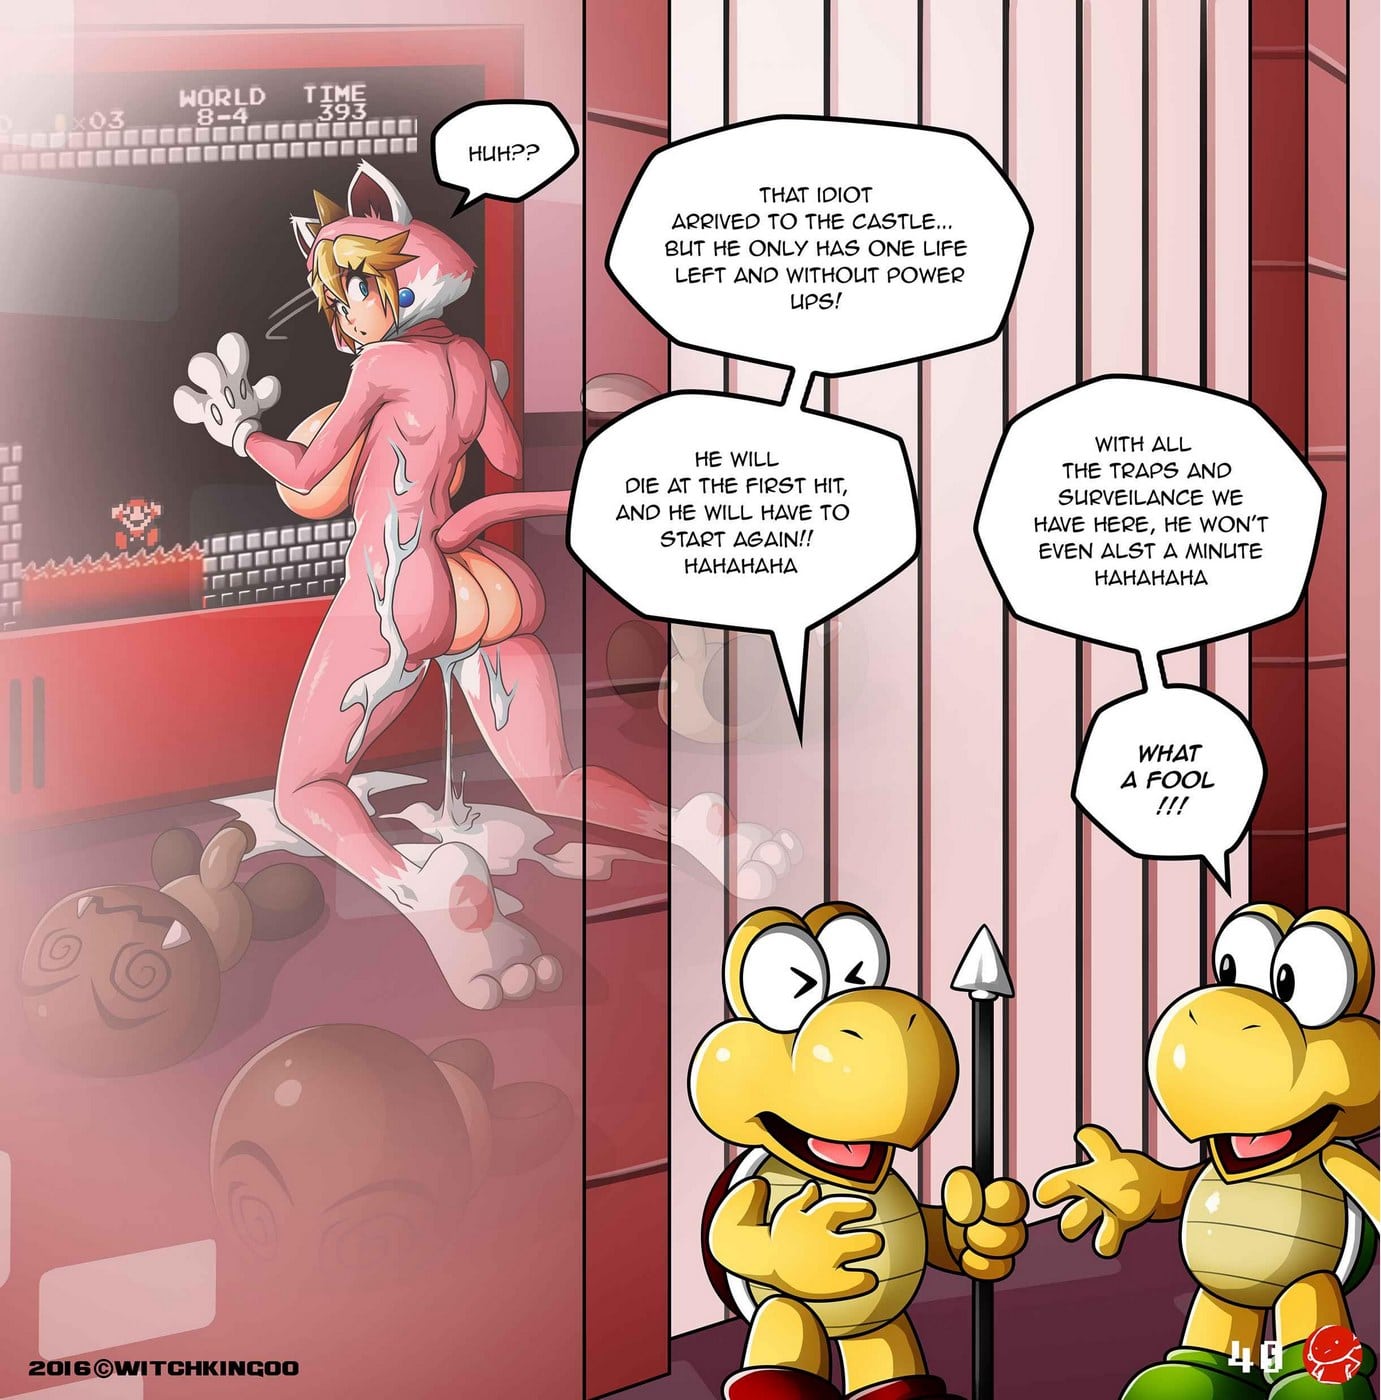 Help Me Mario The Prequel [witchking00] Freeadultcomix Free Online Anime Hentai Erotic Comics